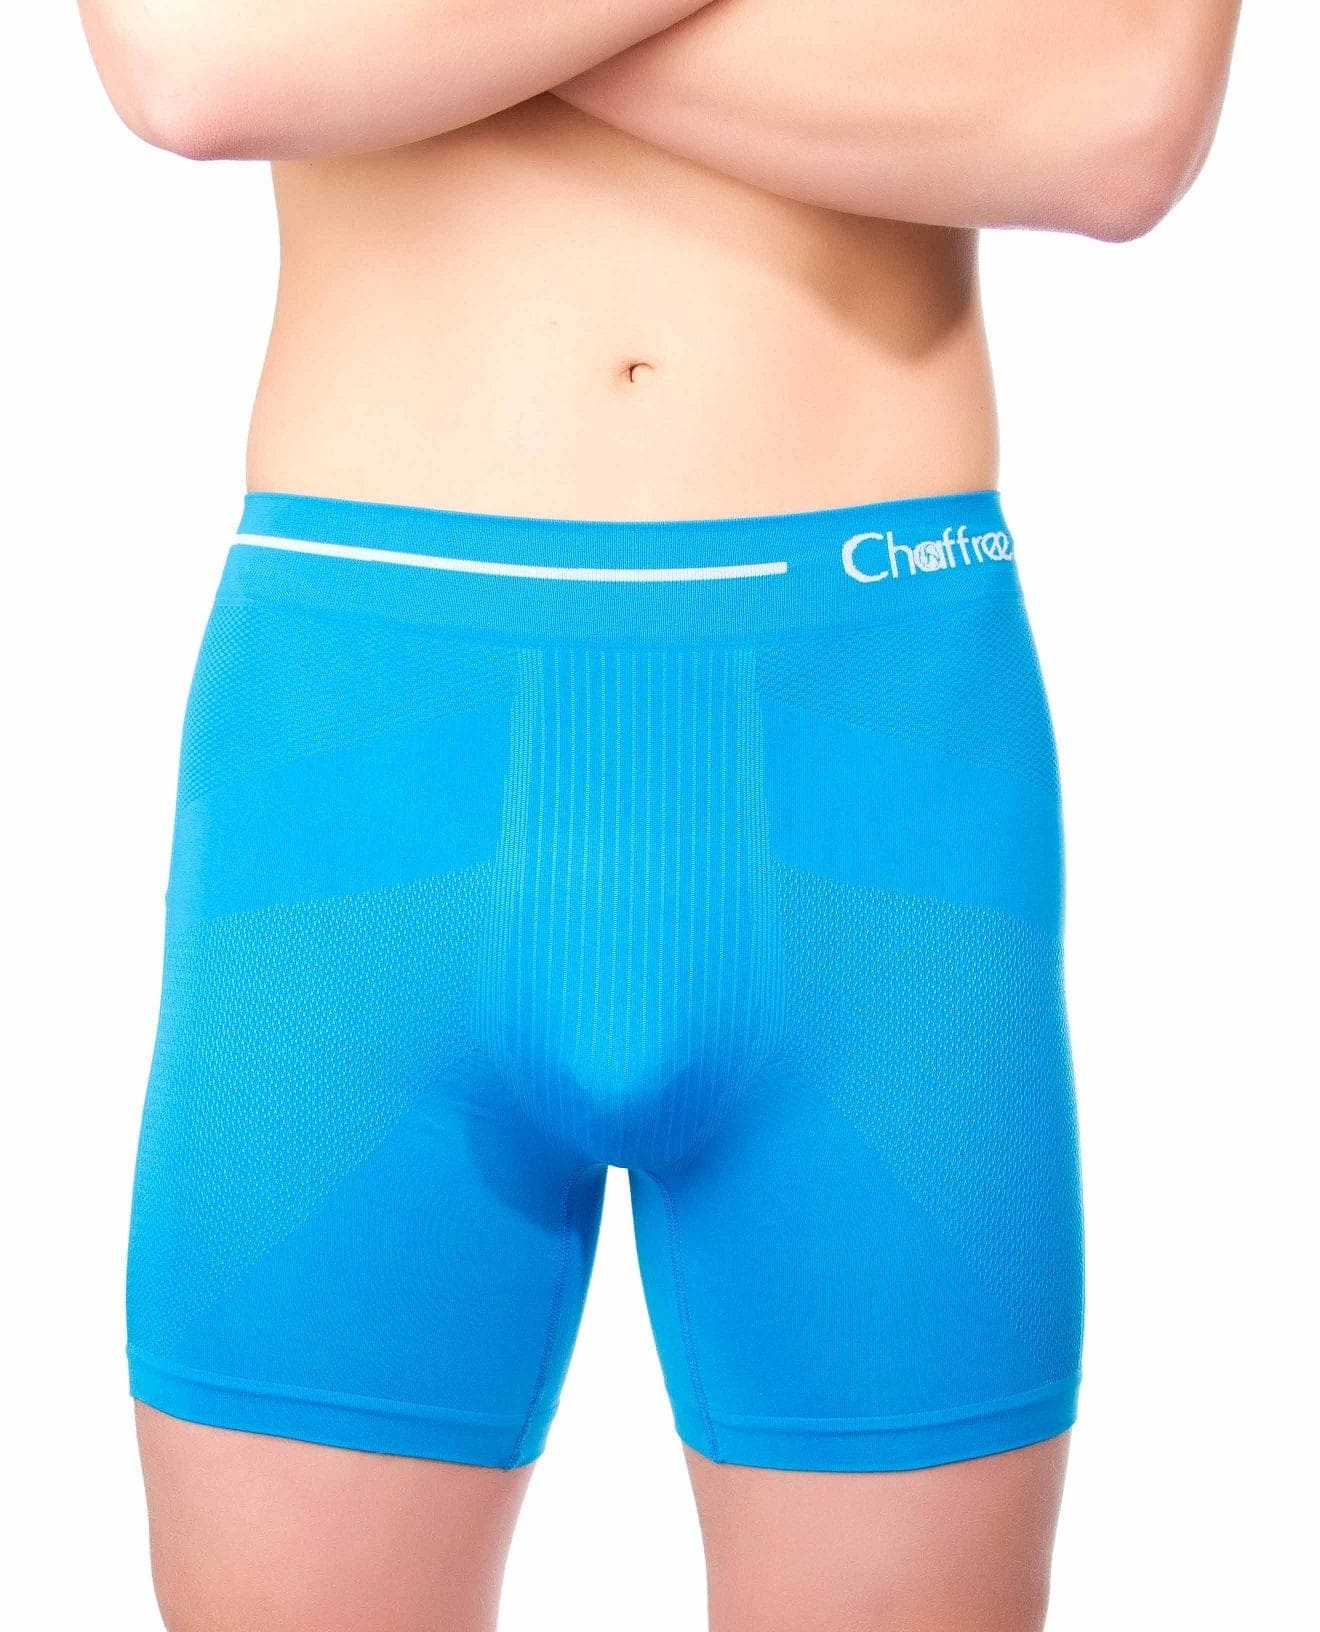 Seamless trunks, comfortable fit, blue, Men's Underwear